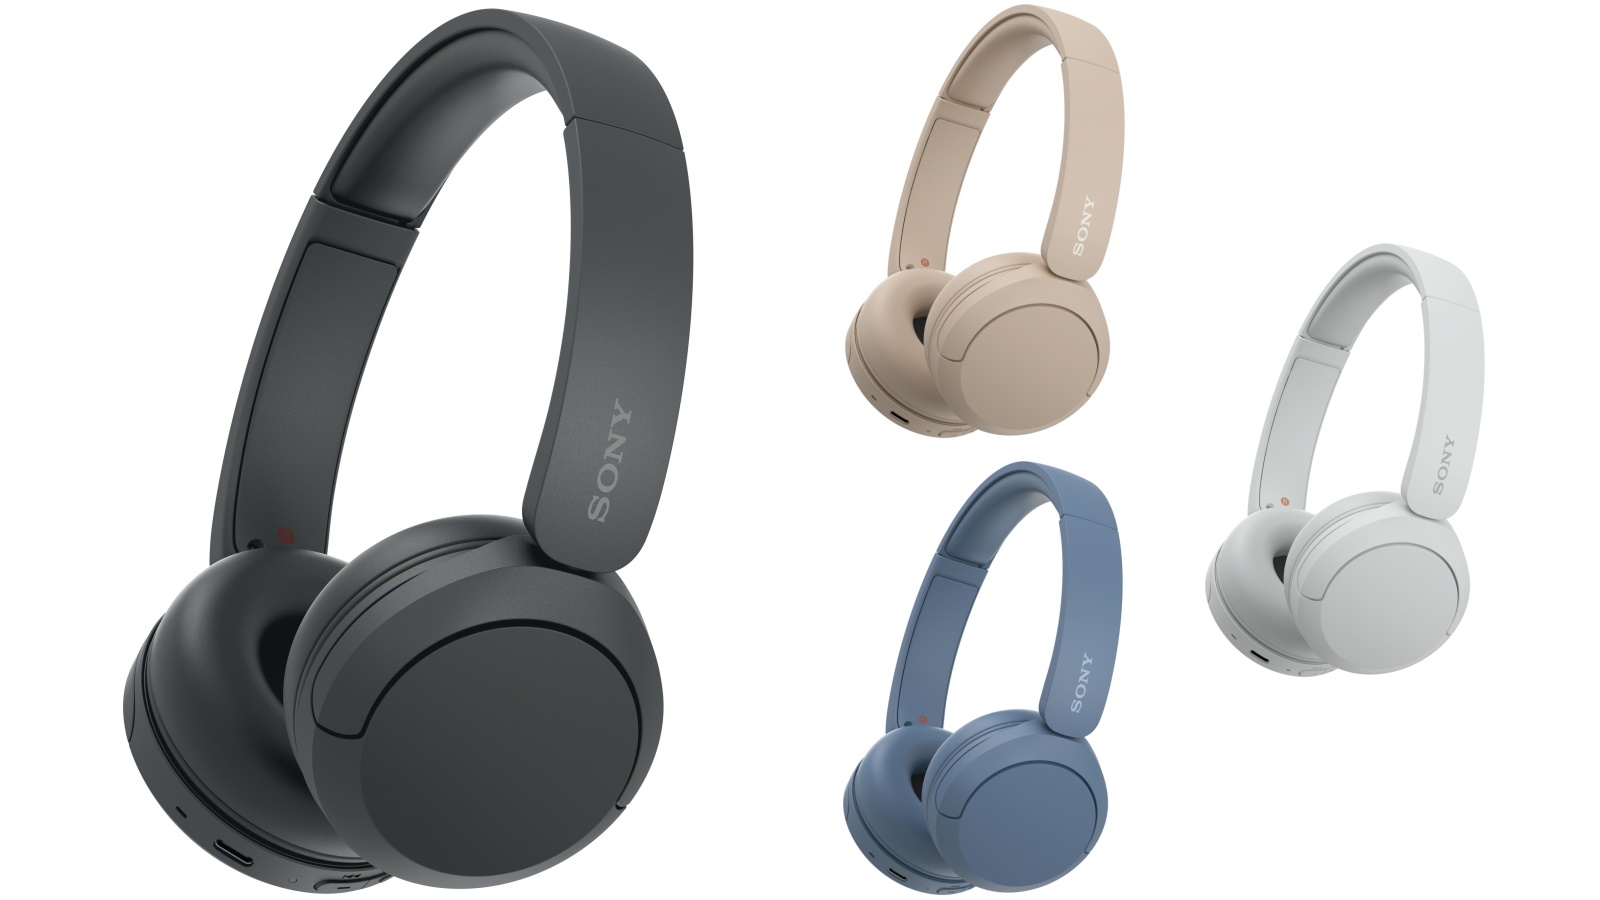 https://hnau.imgix.net/media/catalog/product/w/h/whch520-sony-wireless-on-ear-headphones-hero.jpg